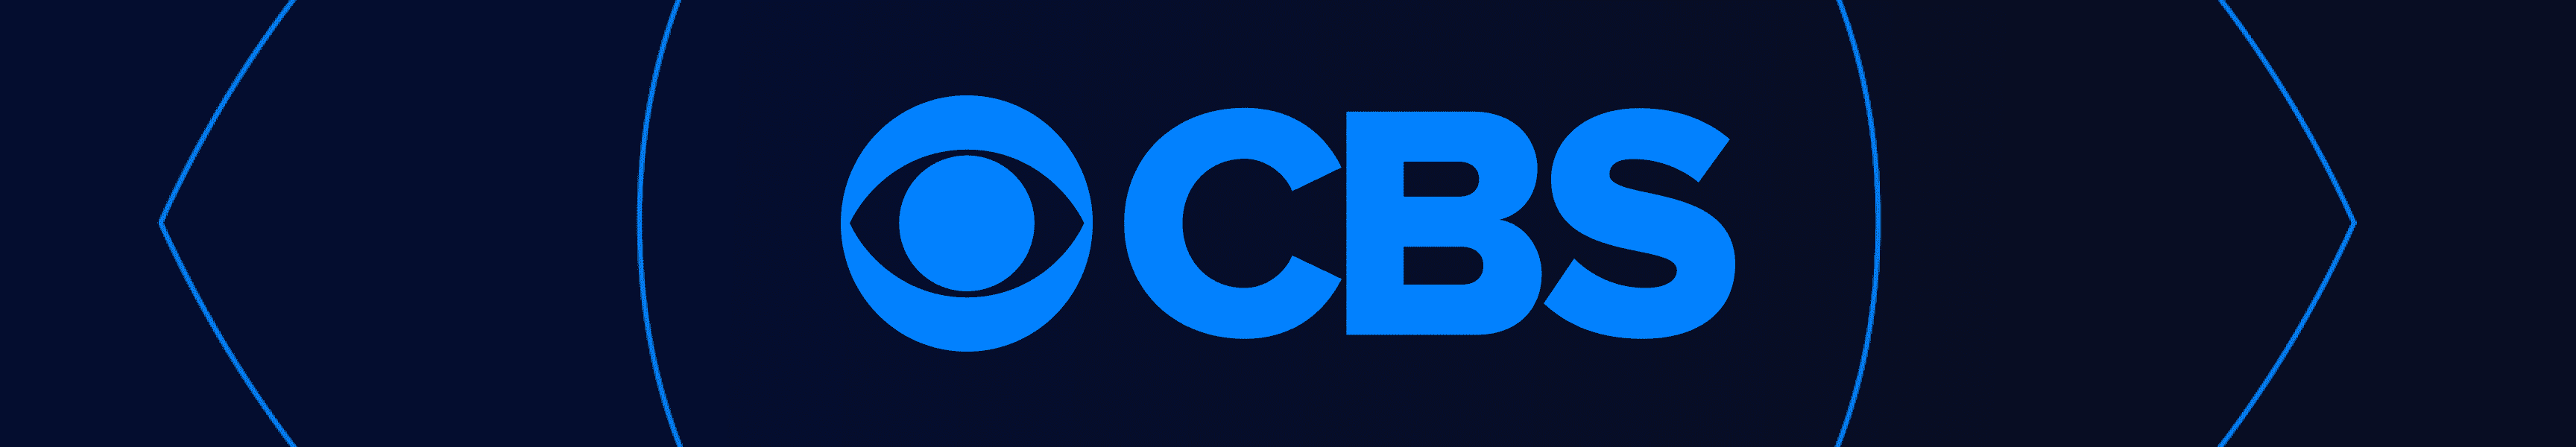 CBS Entertainment Tumblers